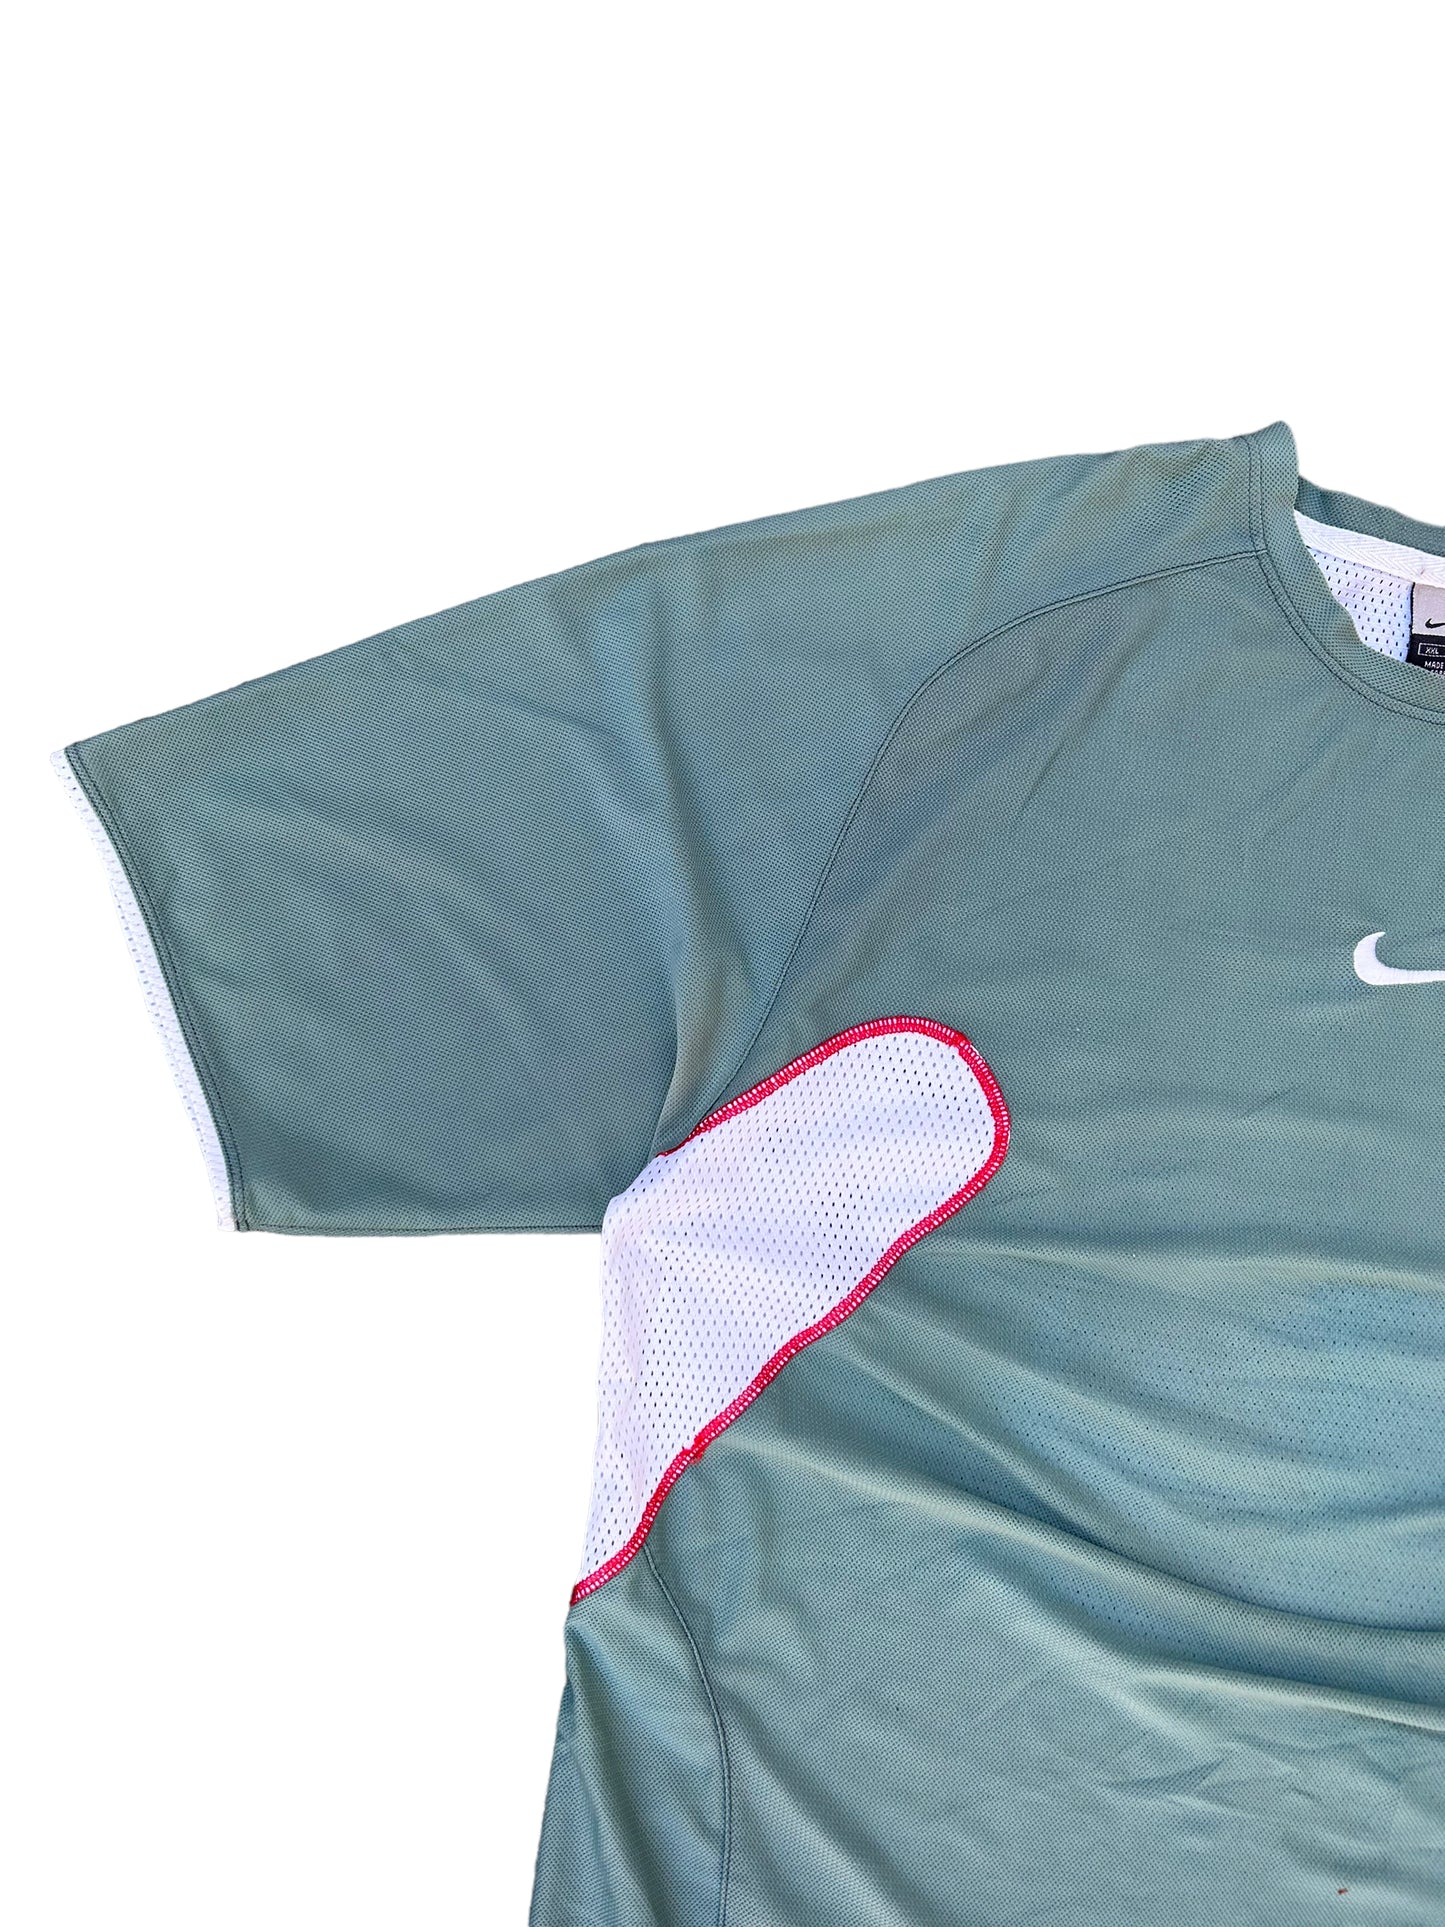 Vintage Nike Training Shirt